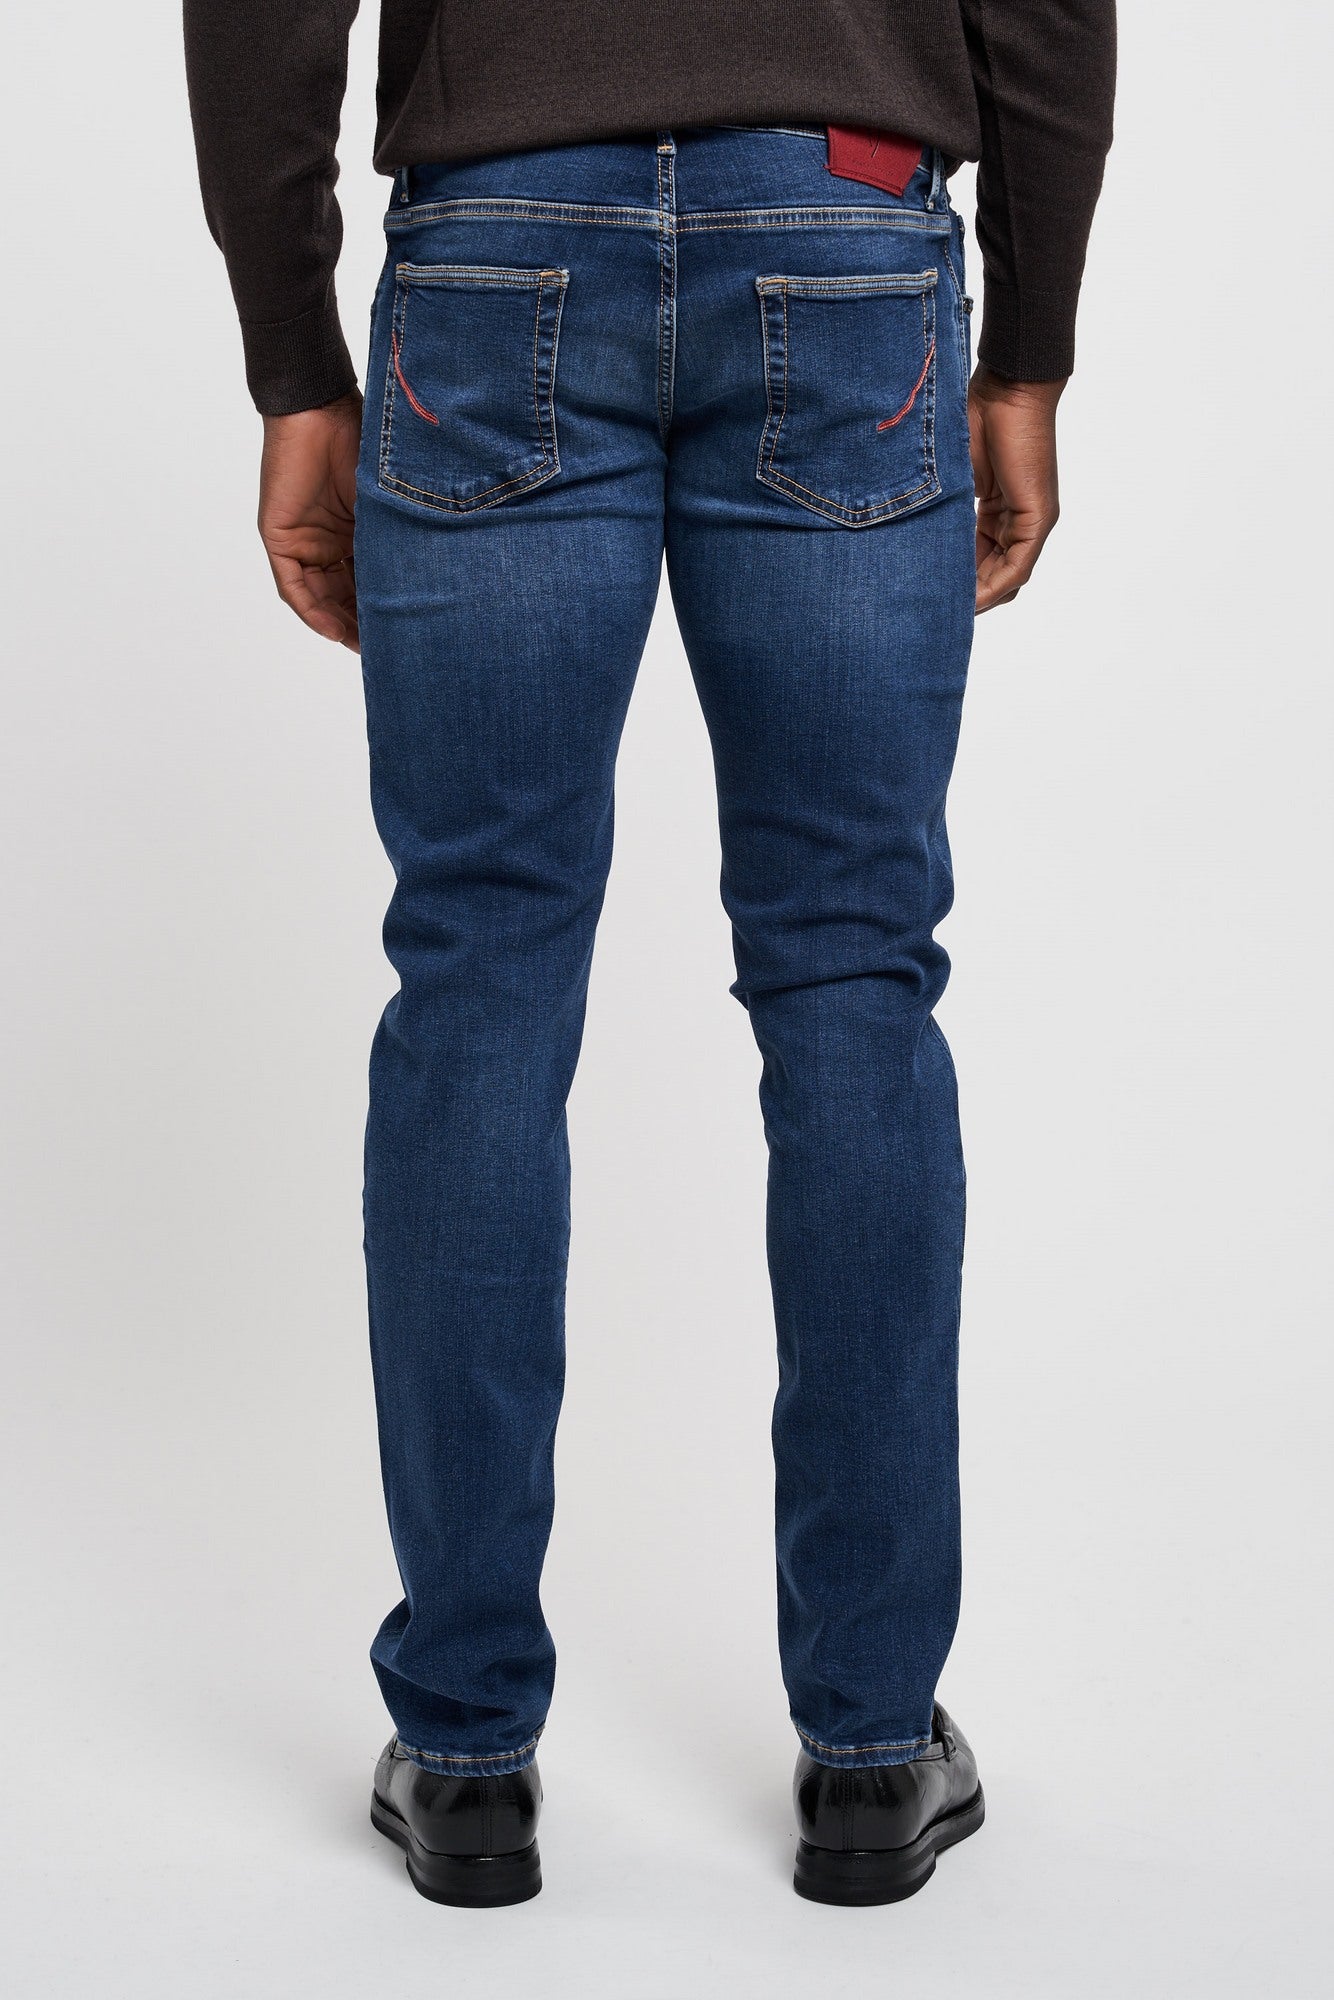 Handpicked Jeans Orvieto in Blue Cotton-3